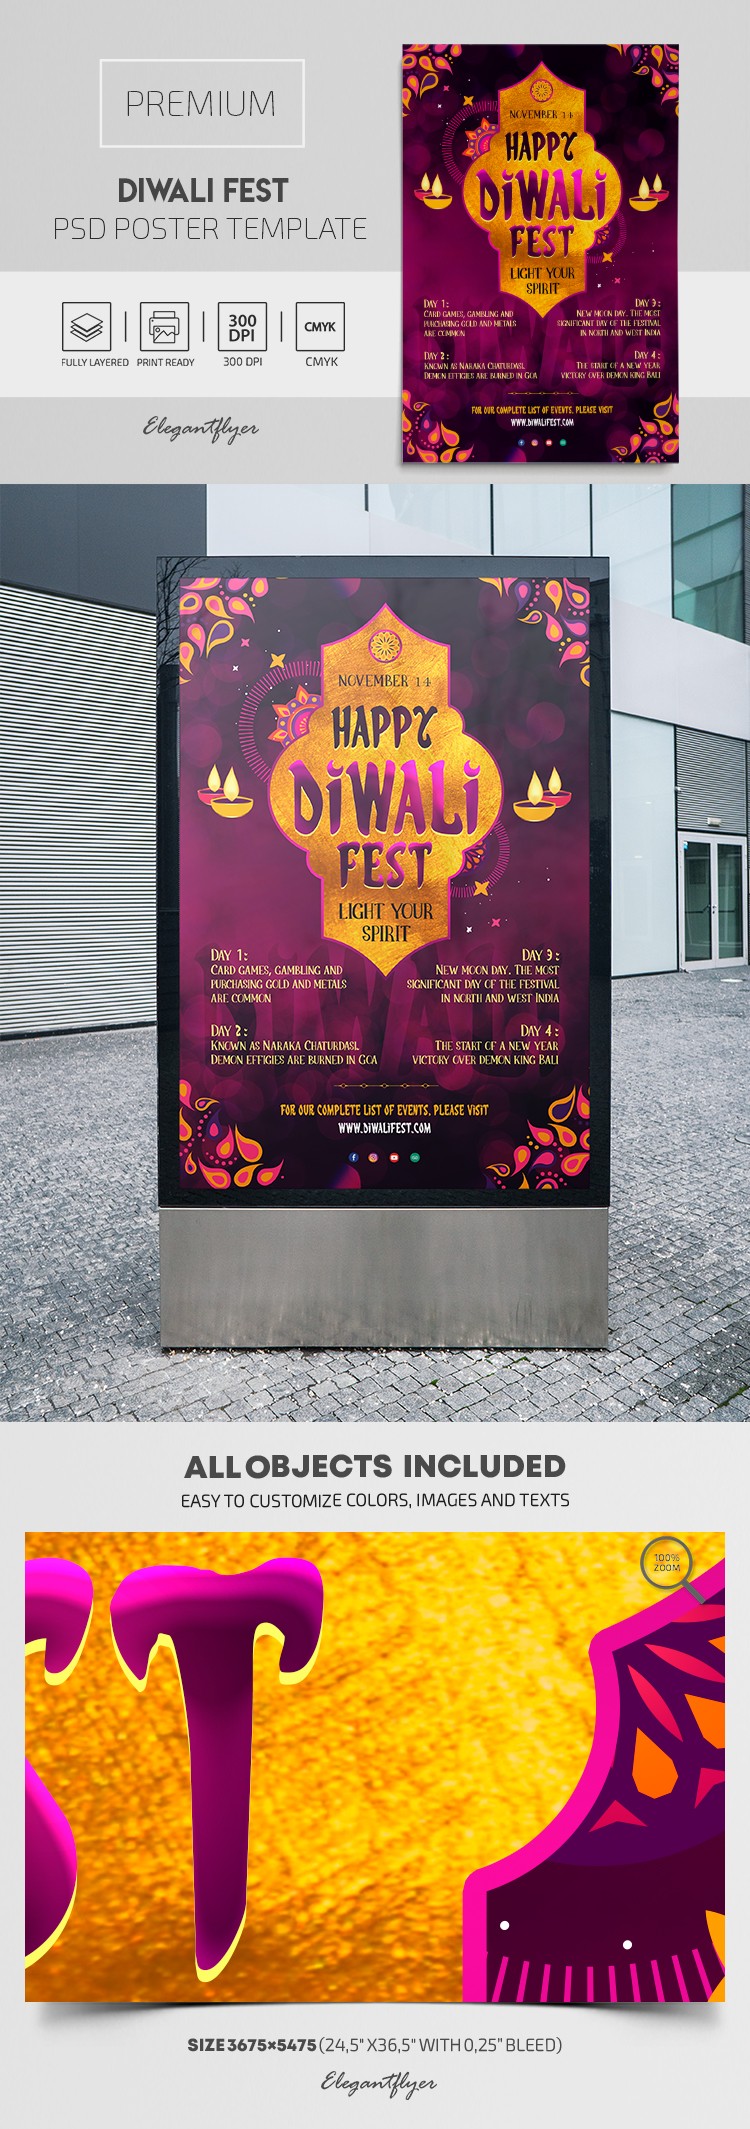 Affiche de la fête de Diwali by ElegantFlyer